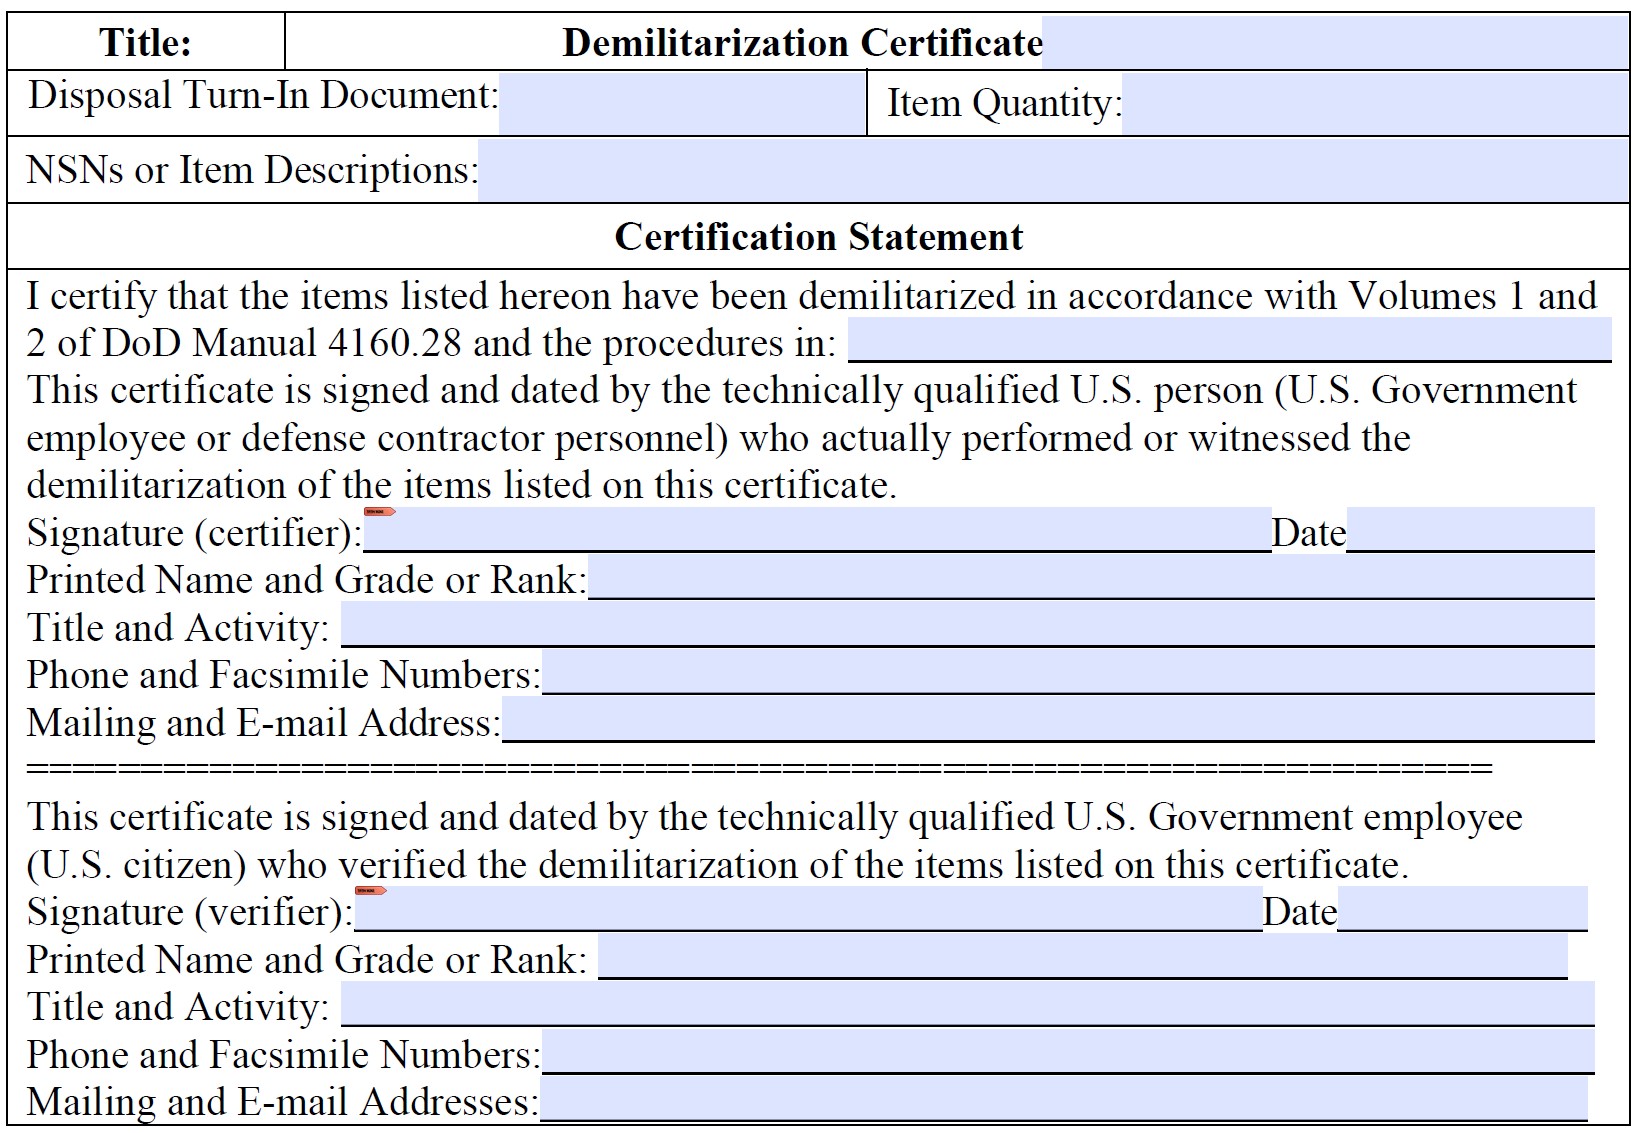 DEMIL Certificate